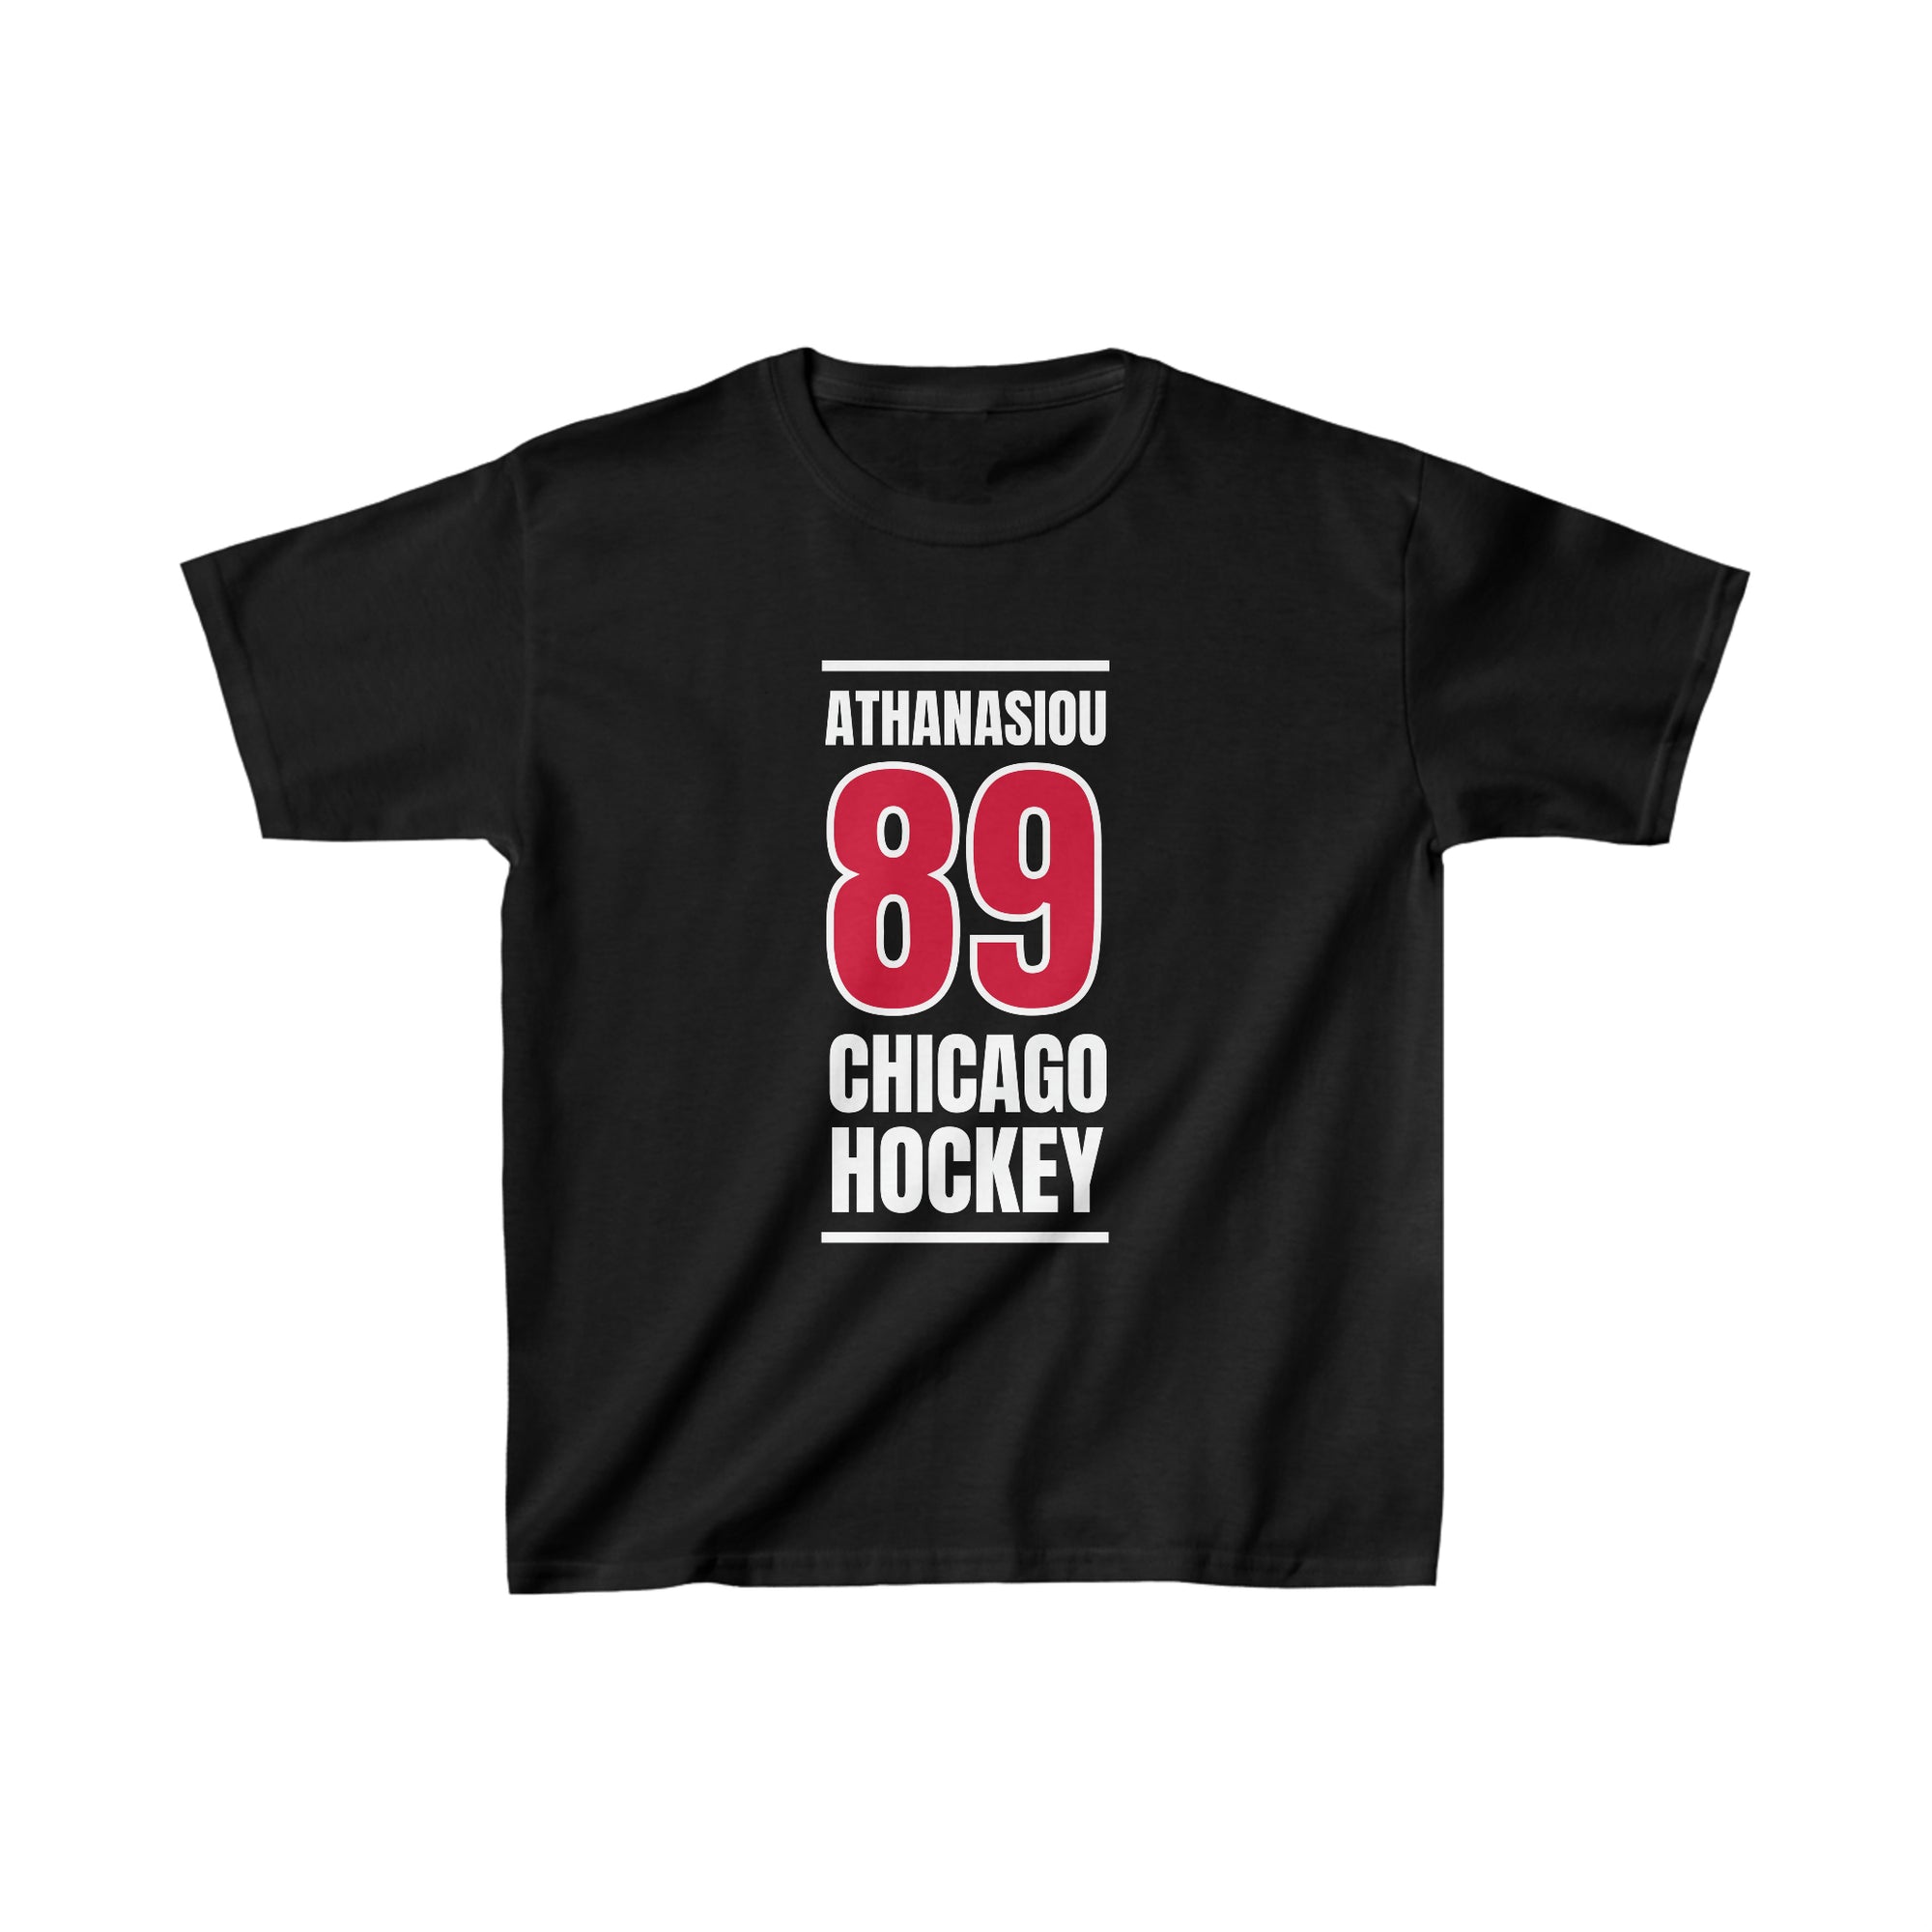 Athanasiou 89 Chicago Hockey Red Vertical Design Kids Tee